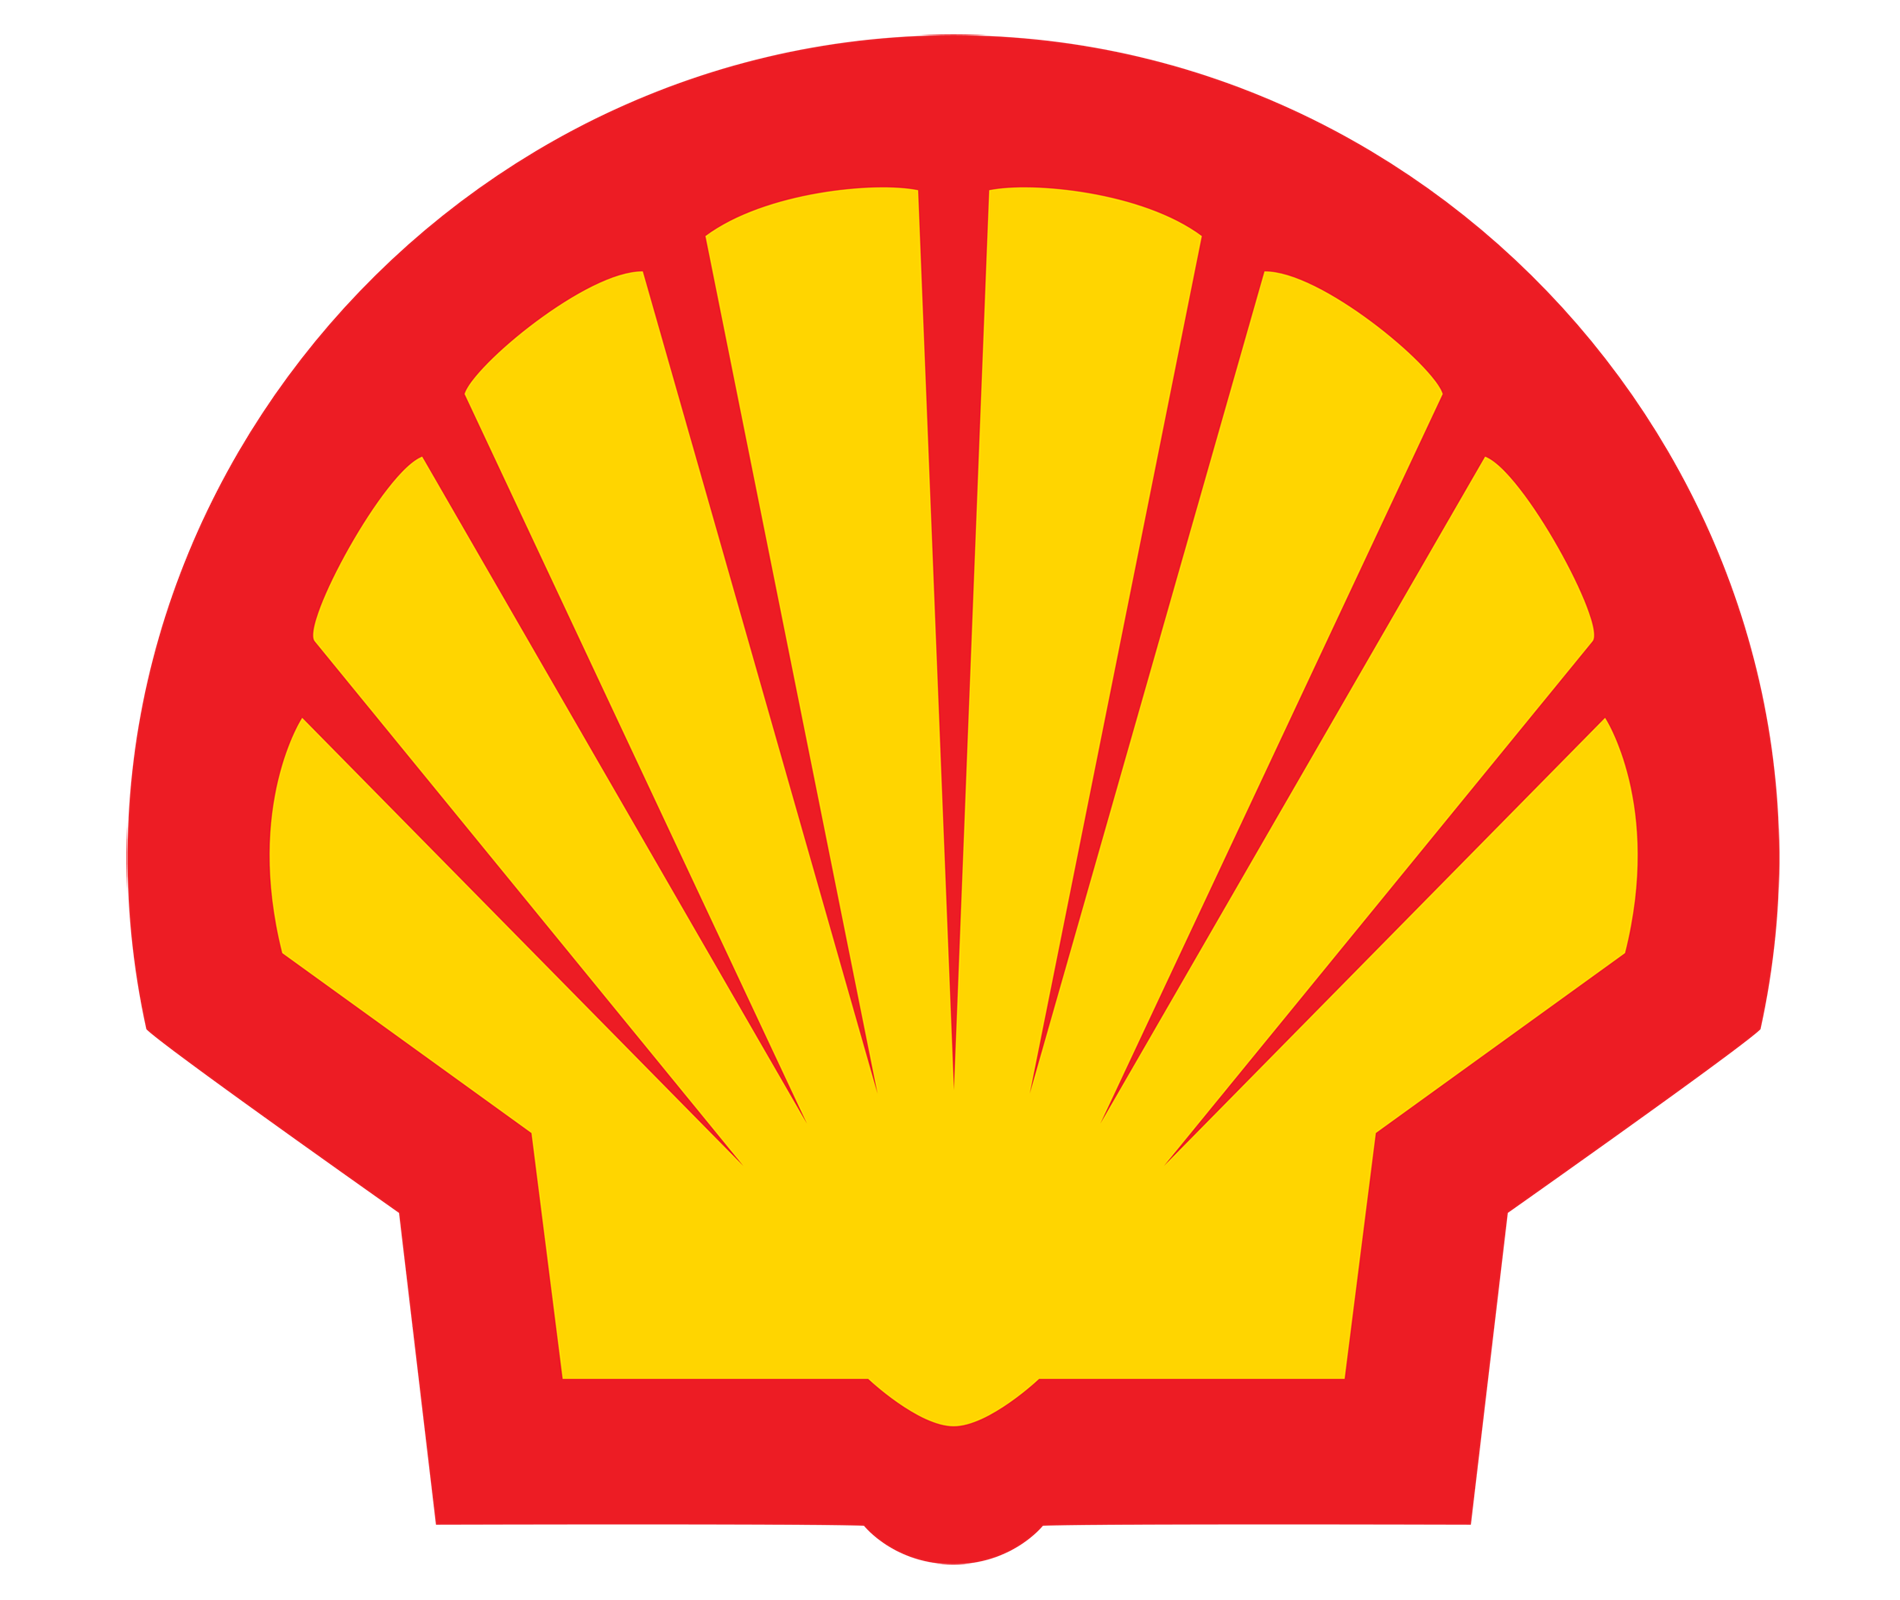 Shell photo